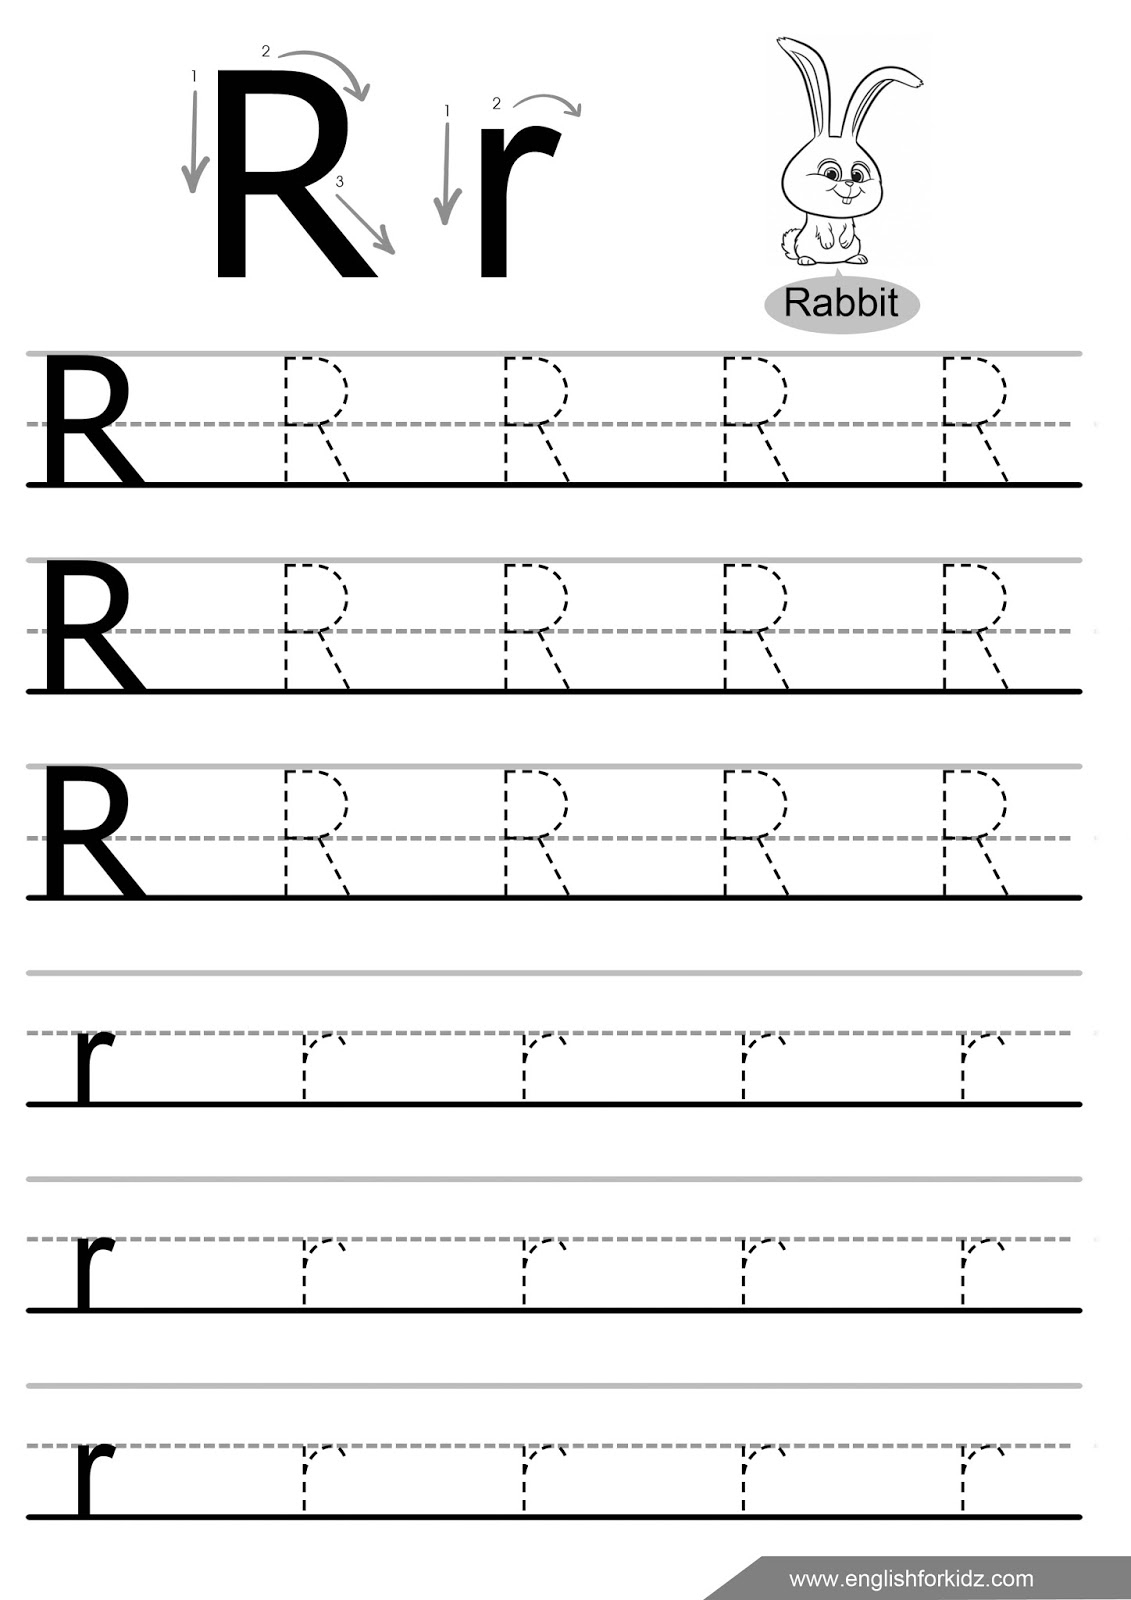 Letter R Tracing Sheet Paringin st2